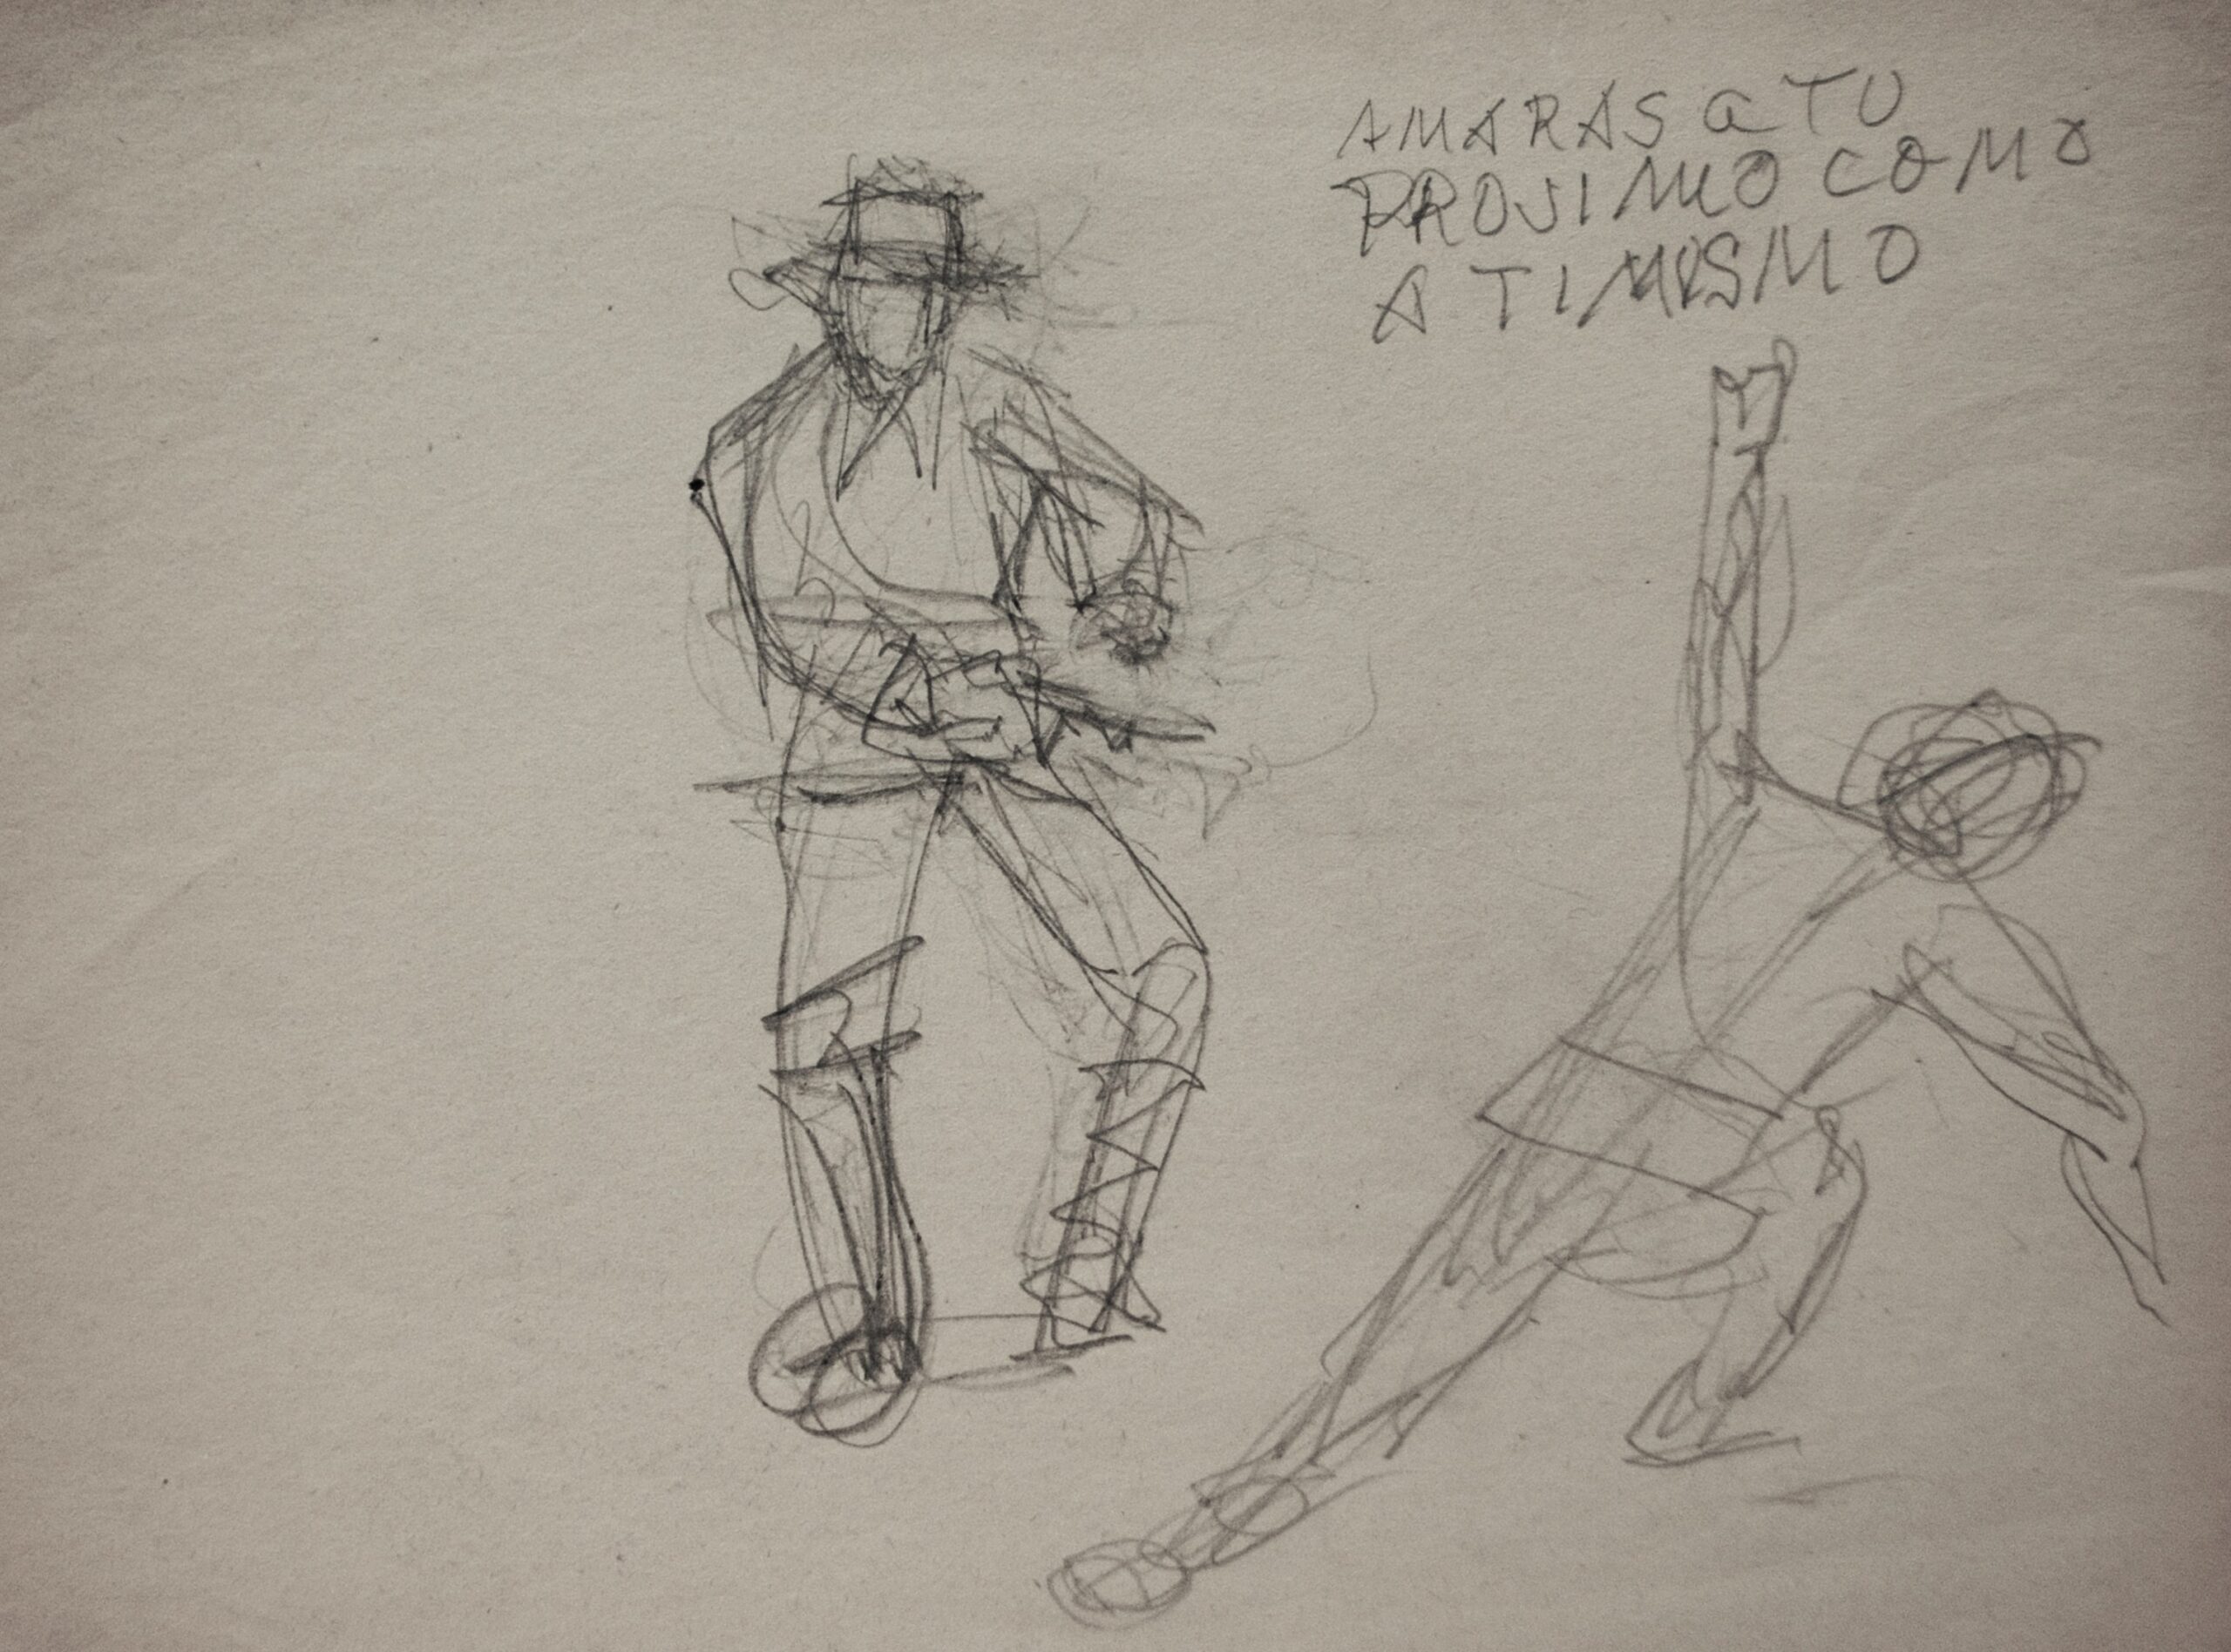 Dibujo de José Manaut. Hombre disparando a otro hombre. Arriba a la derecha: Amarás a tu prójimo como a tí mismo.